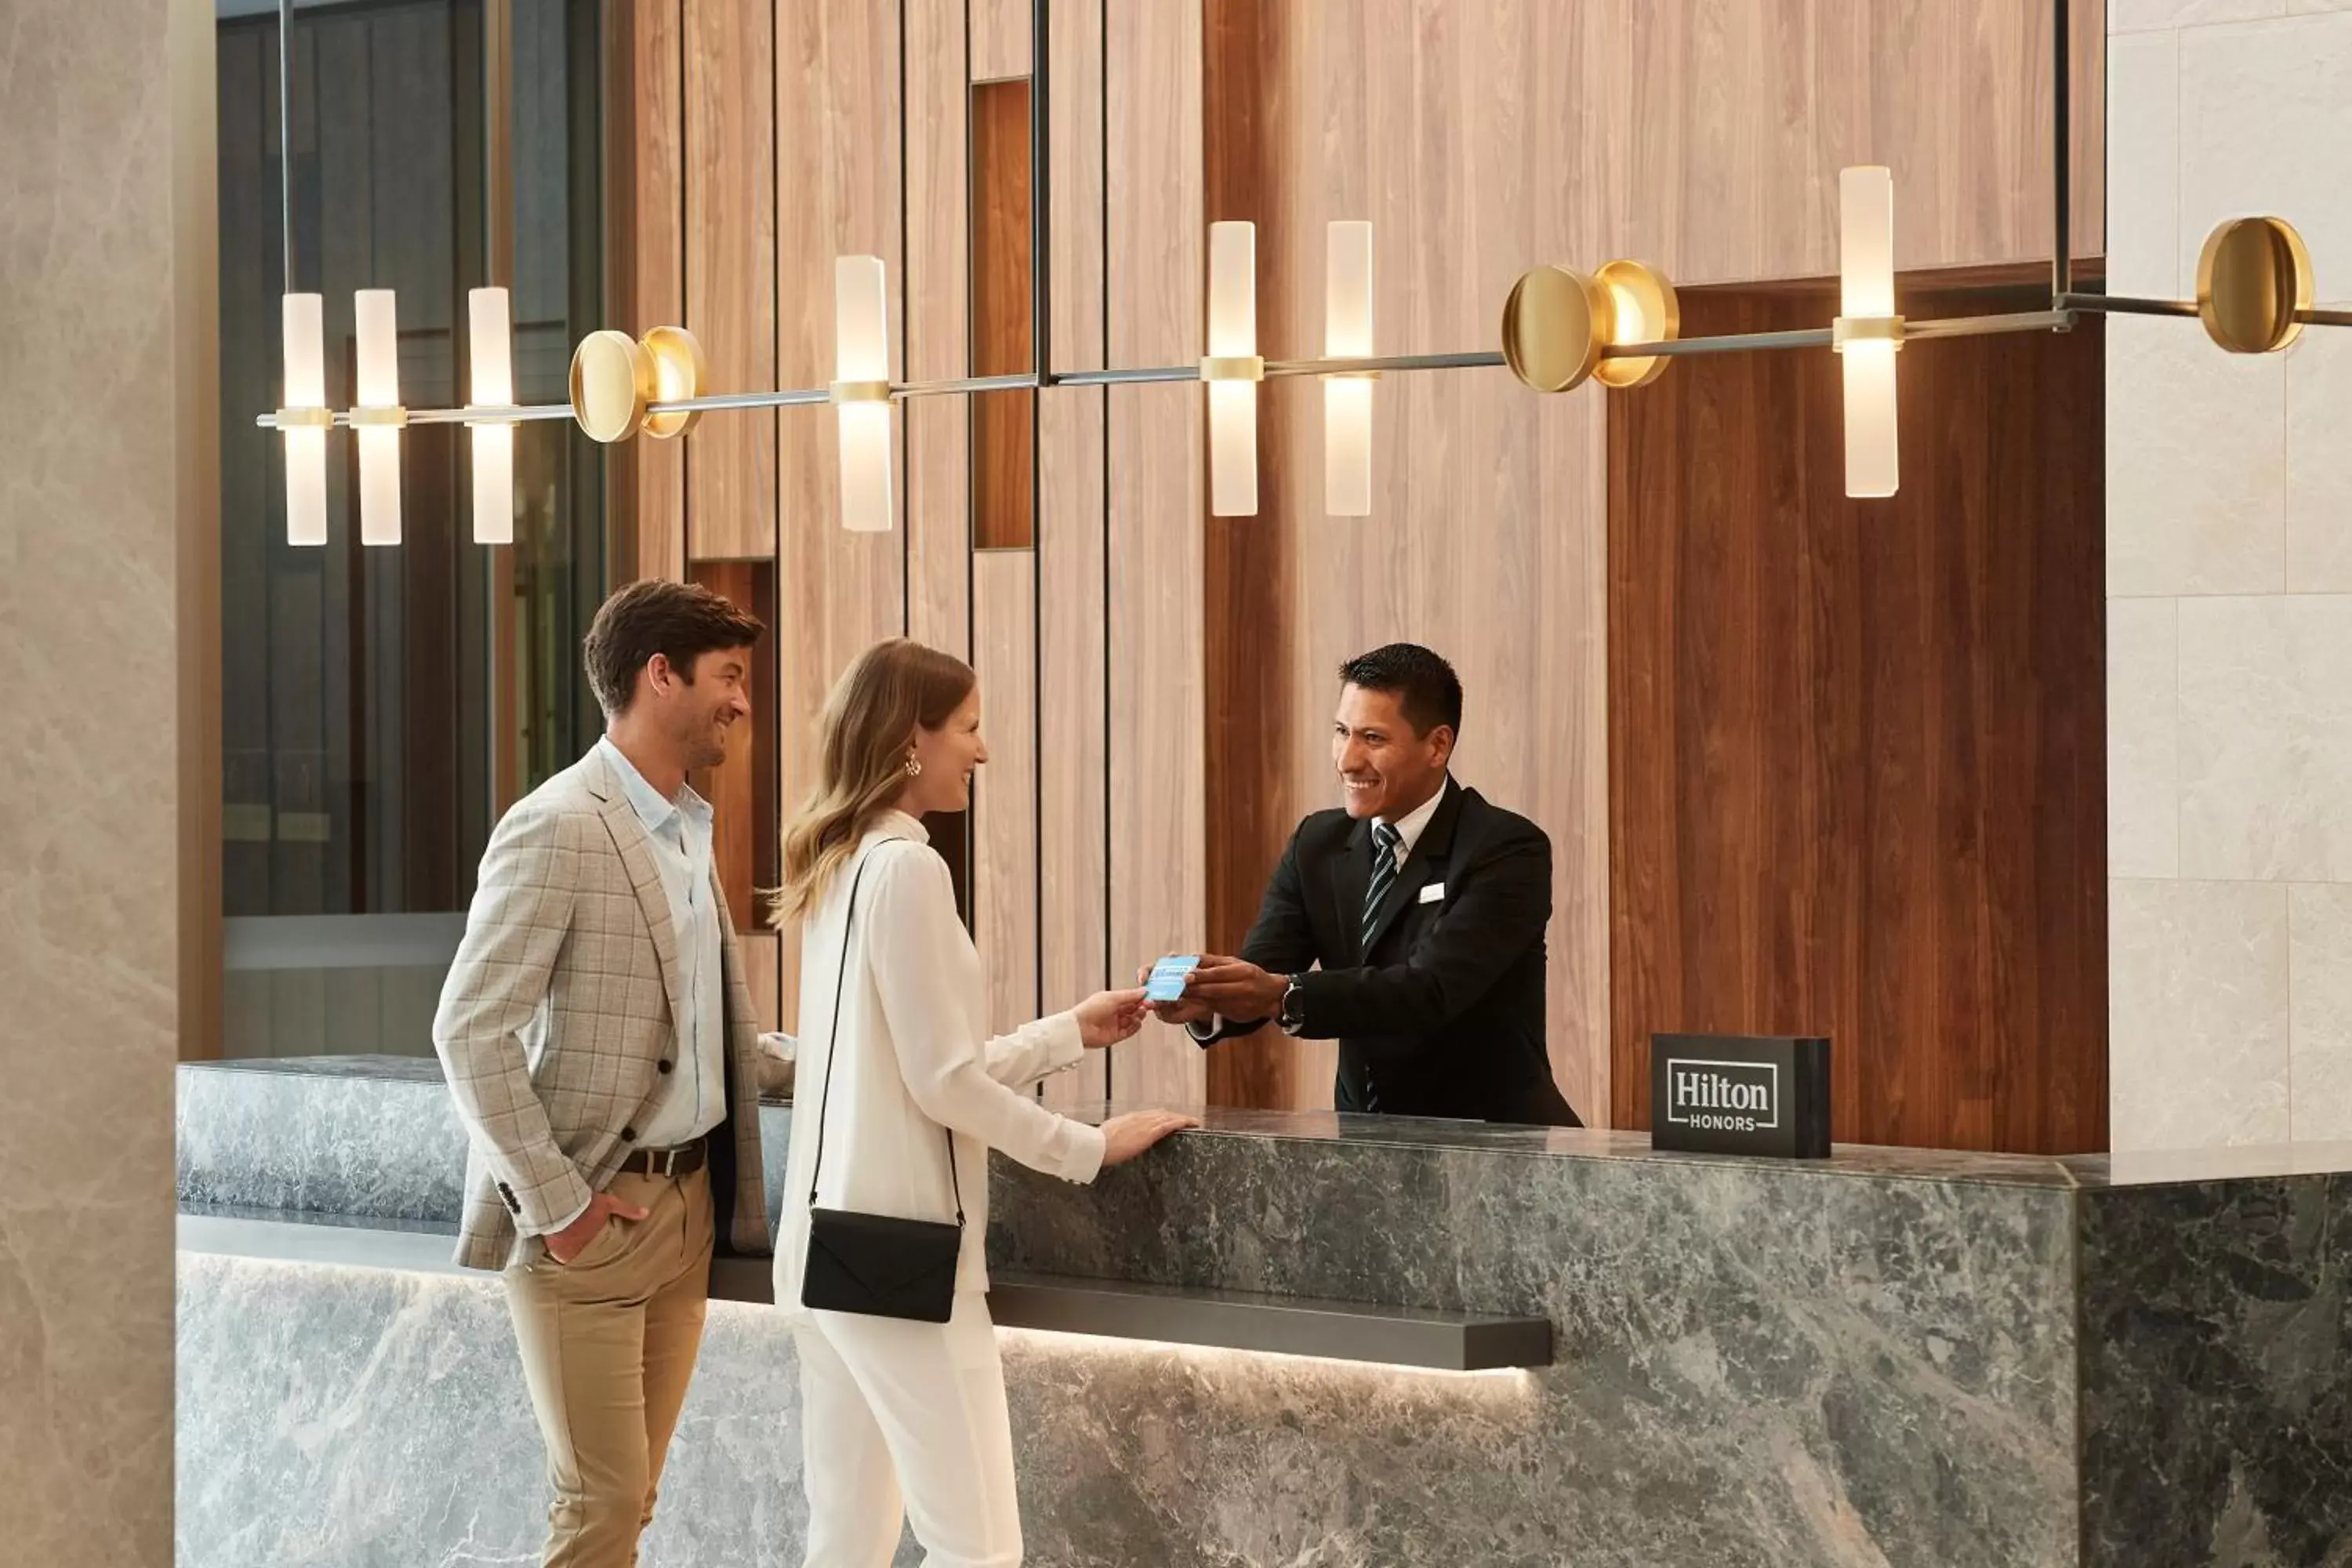 Lobby or reception in Parmelia Hilton Perth